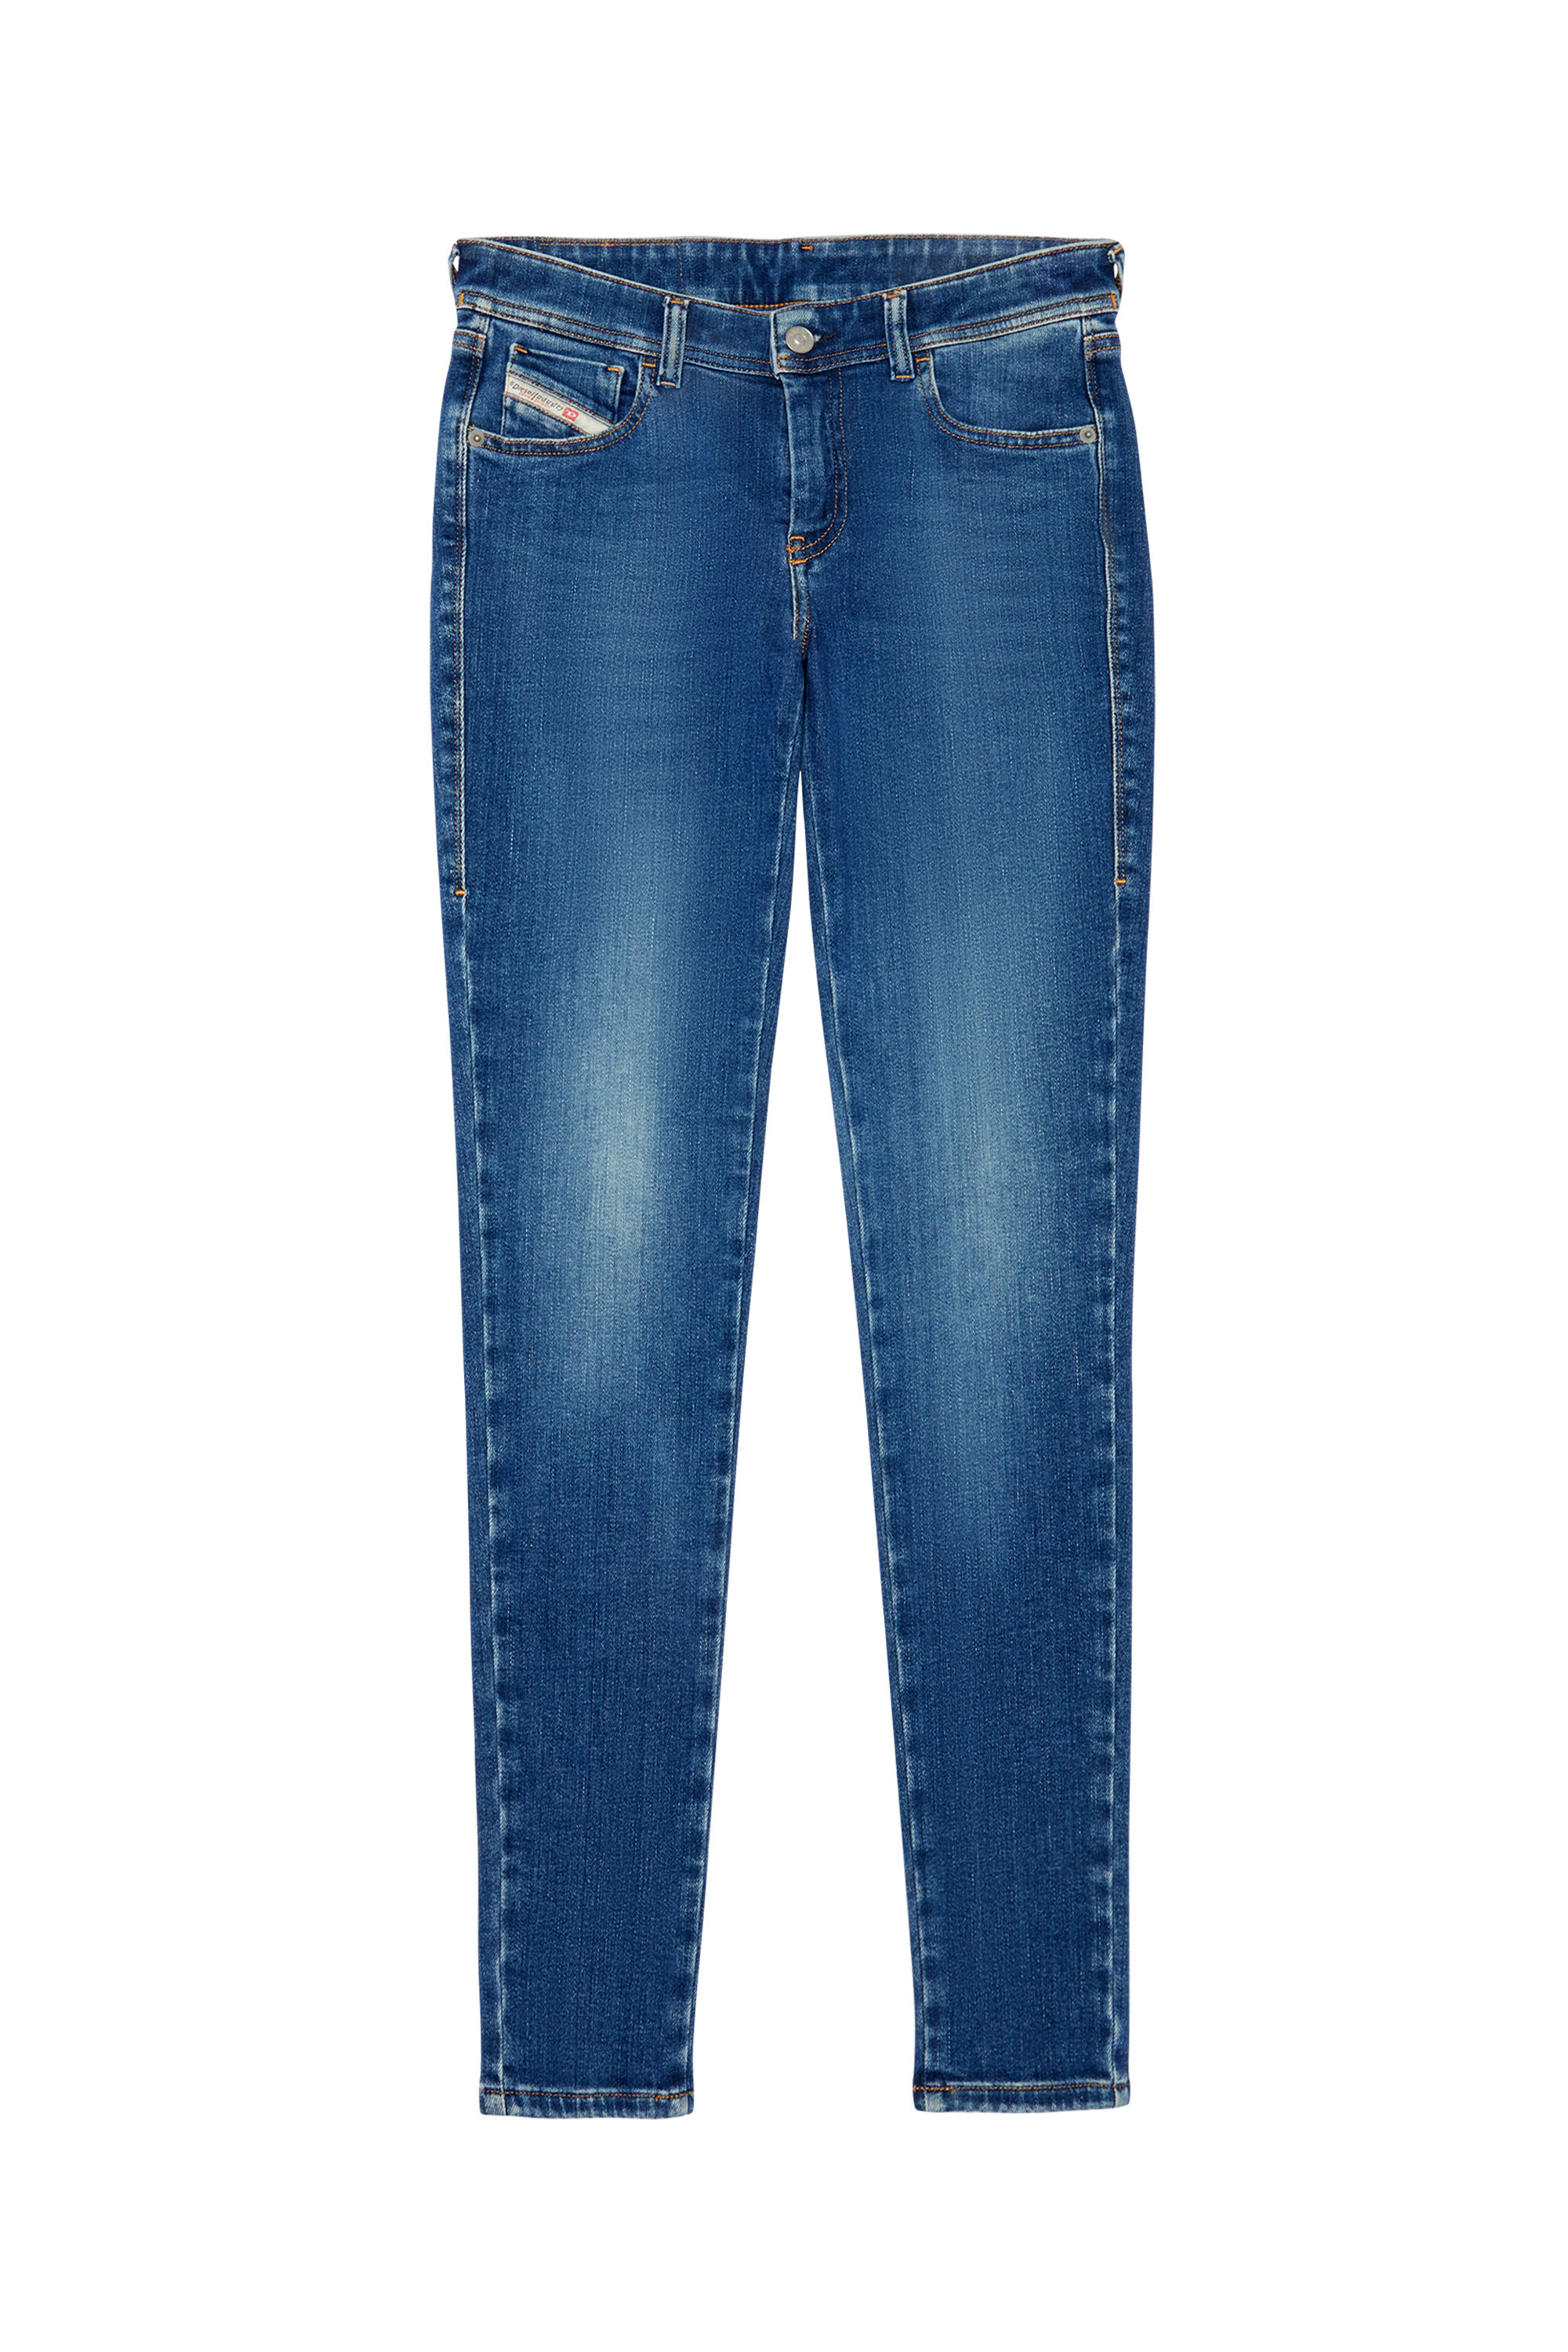 2018 Slandy low 09C21 Super skinny Jeans, Medium blue - Jeans